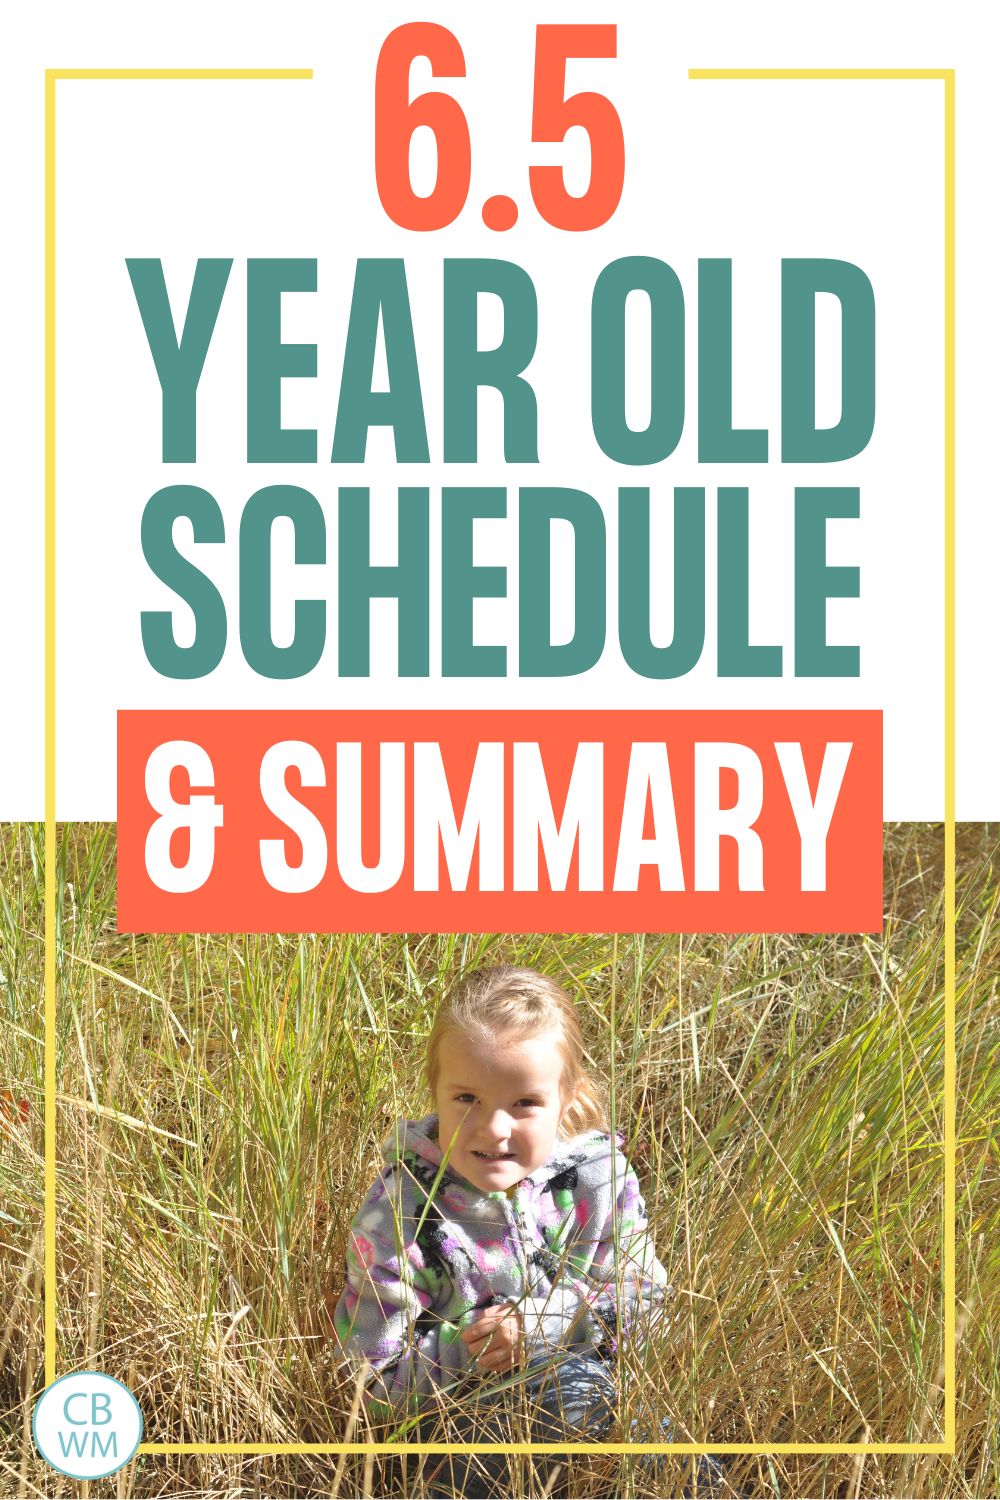 6.5 year old schedule